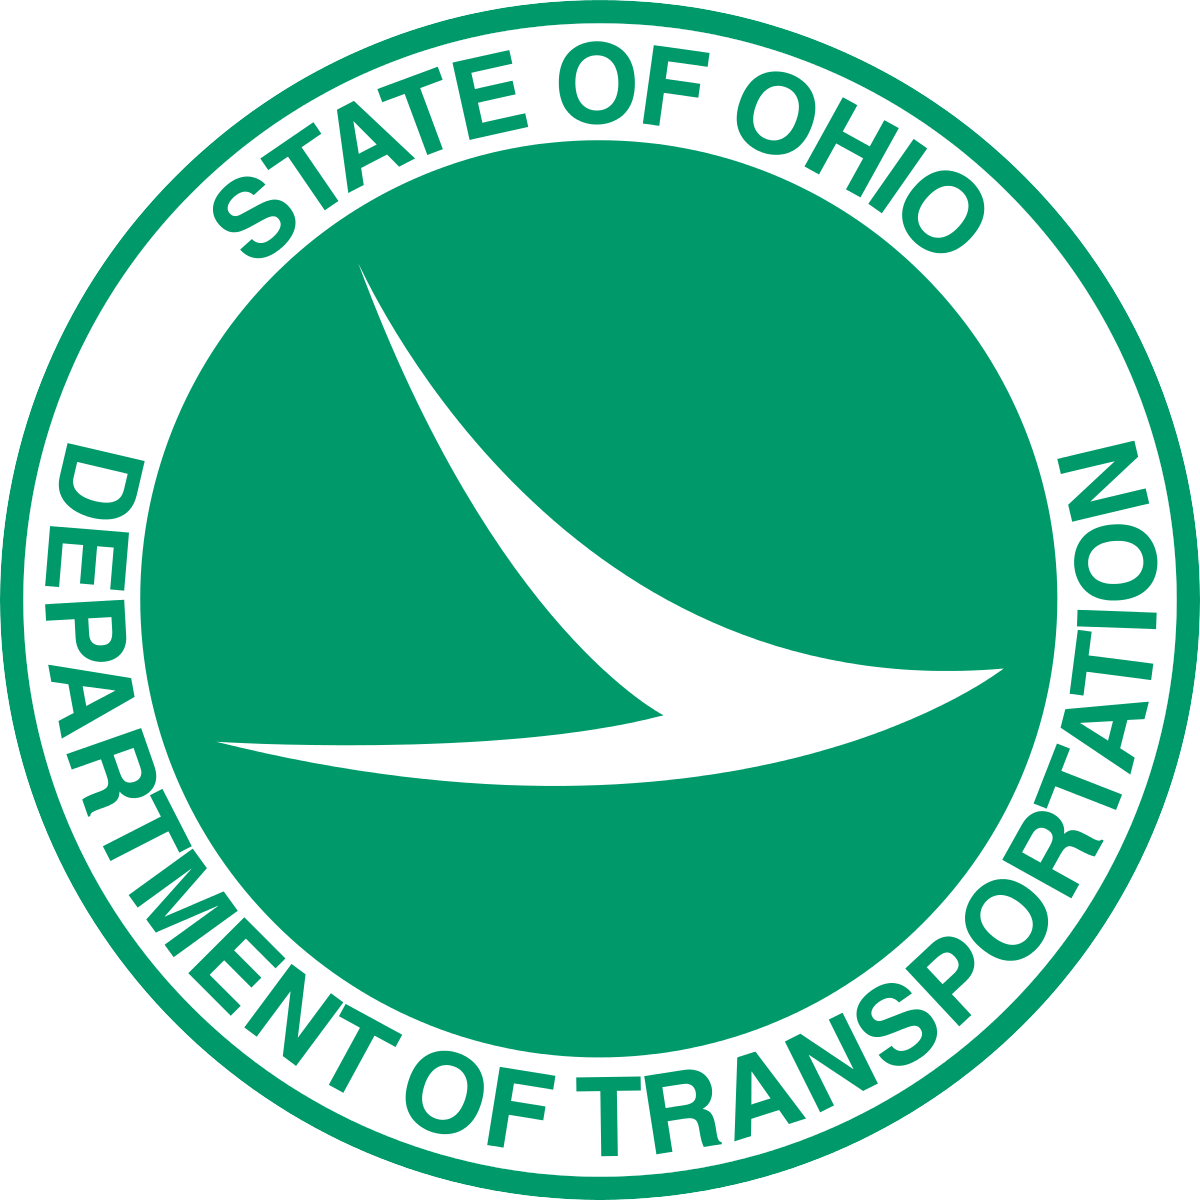 environmental and field biology department of transportation logo